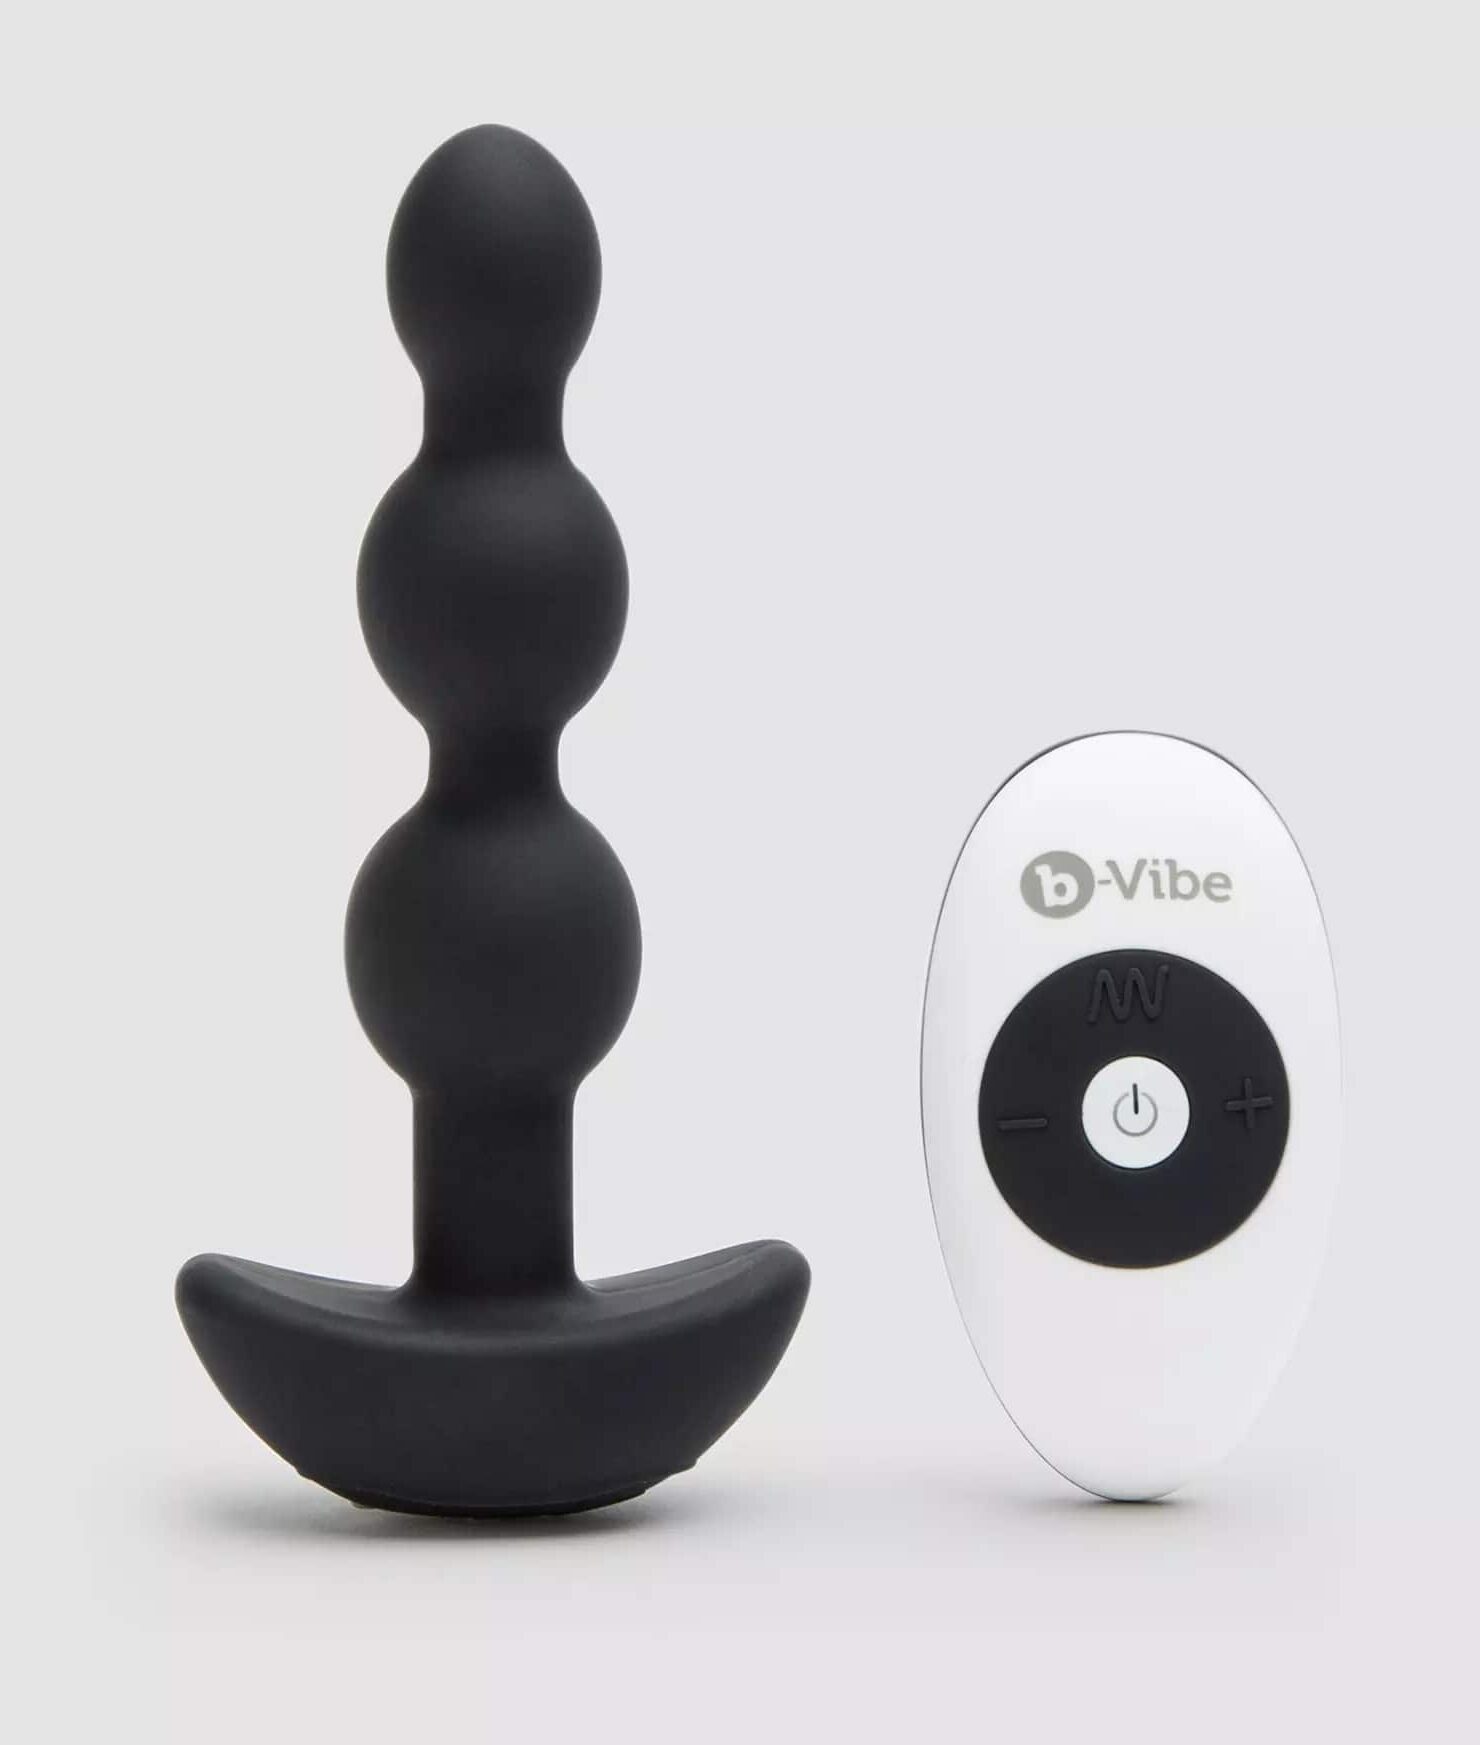 b-Vibe Remote Control Vibrating Anal Beads